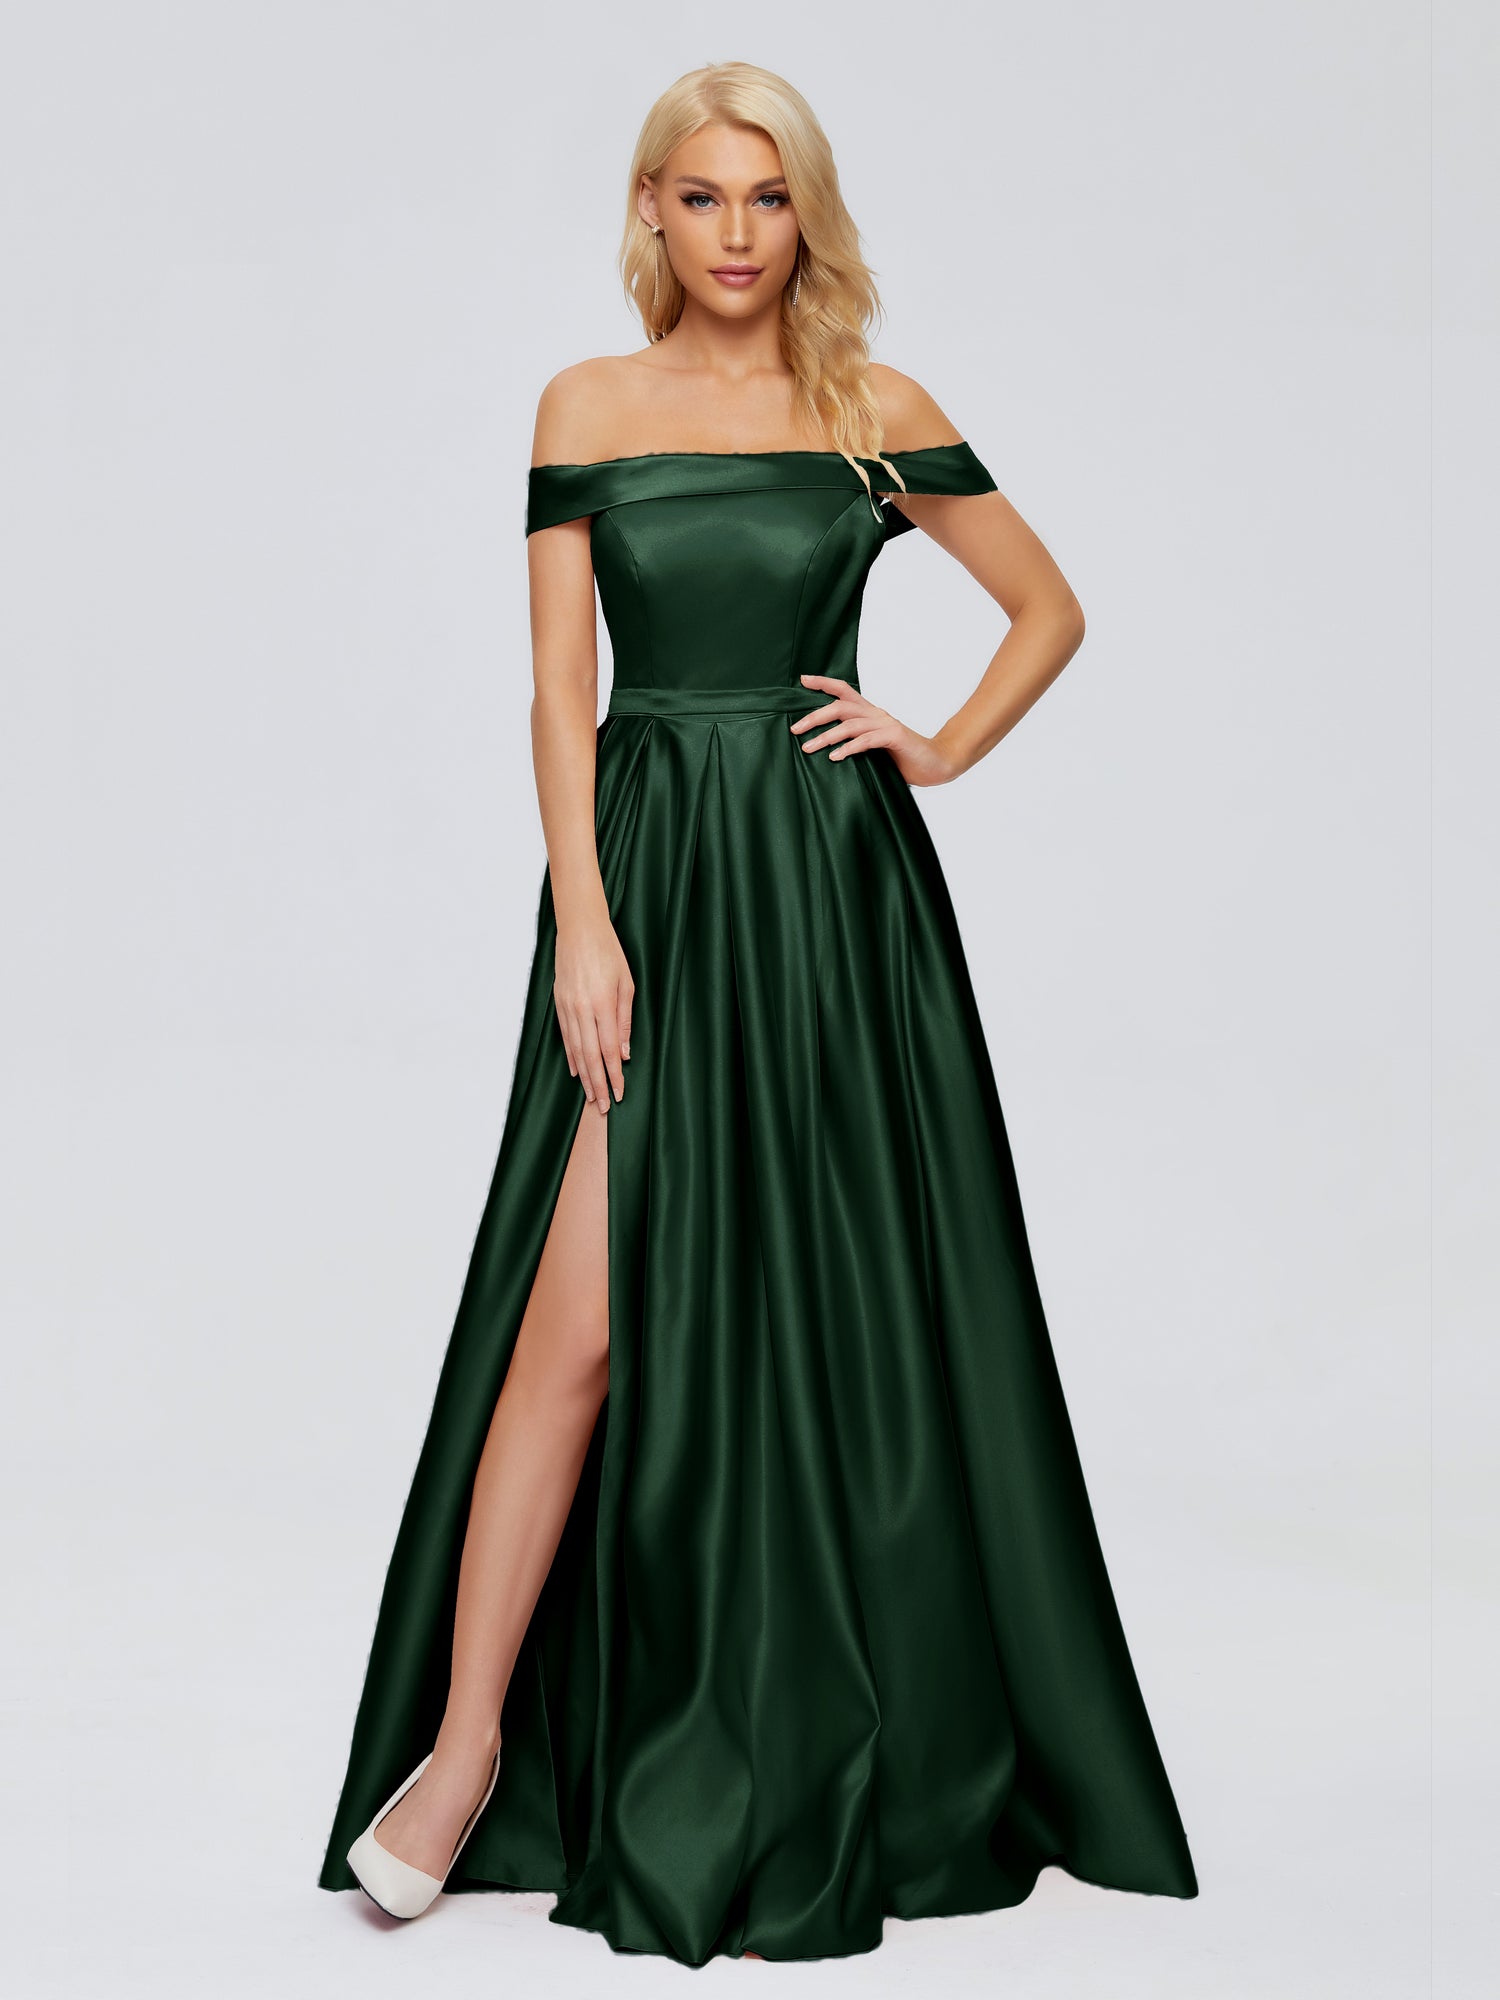 Hunter Green Bridesmaid Dresses